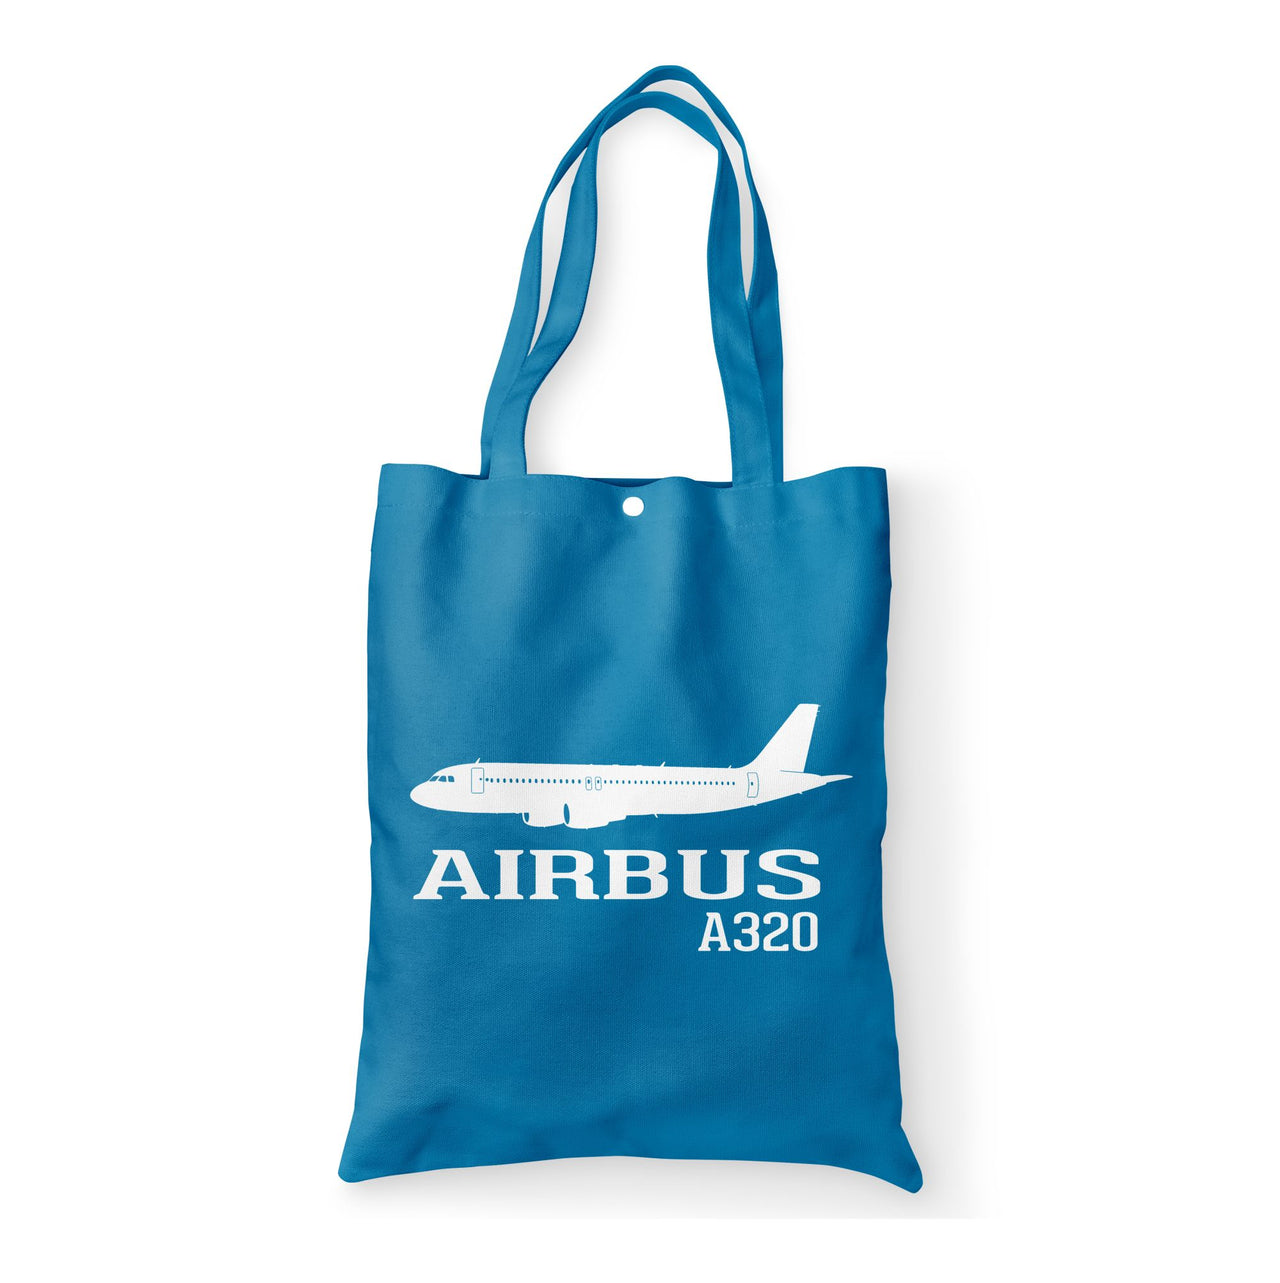 Airbus A320 Printed Designed Tote Bags